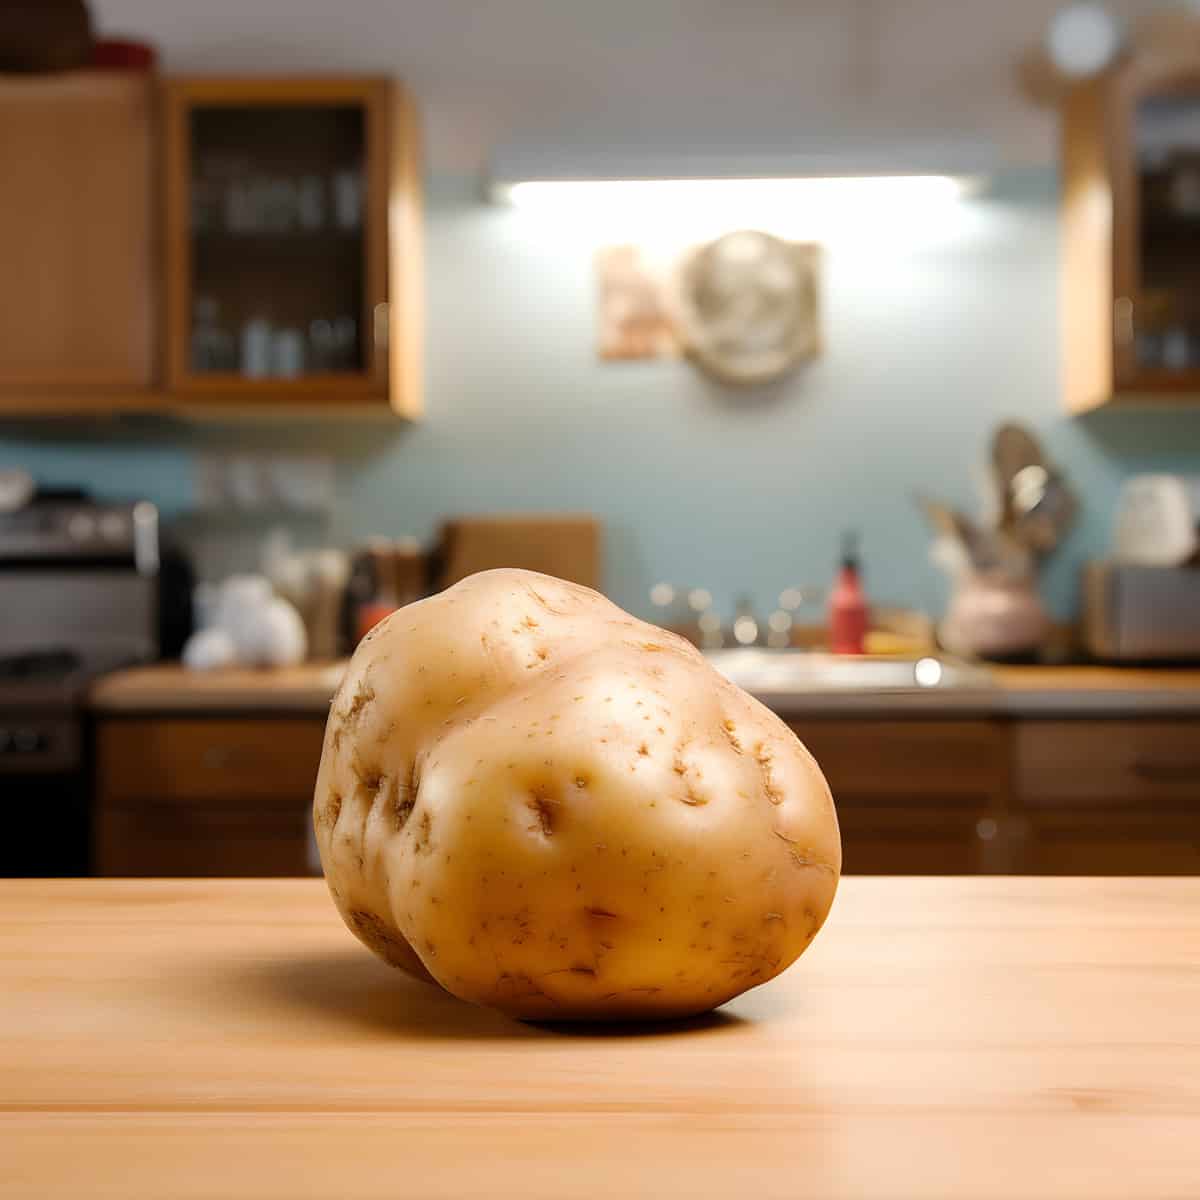 Parel Potatoes on a kitchen counter